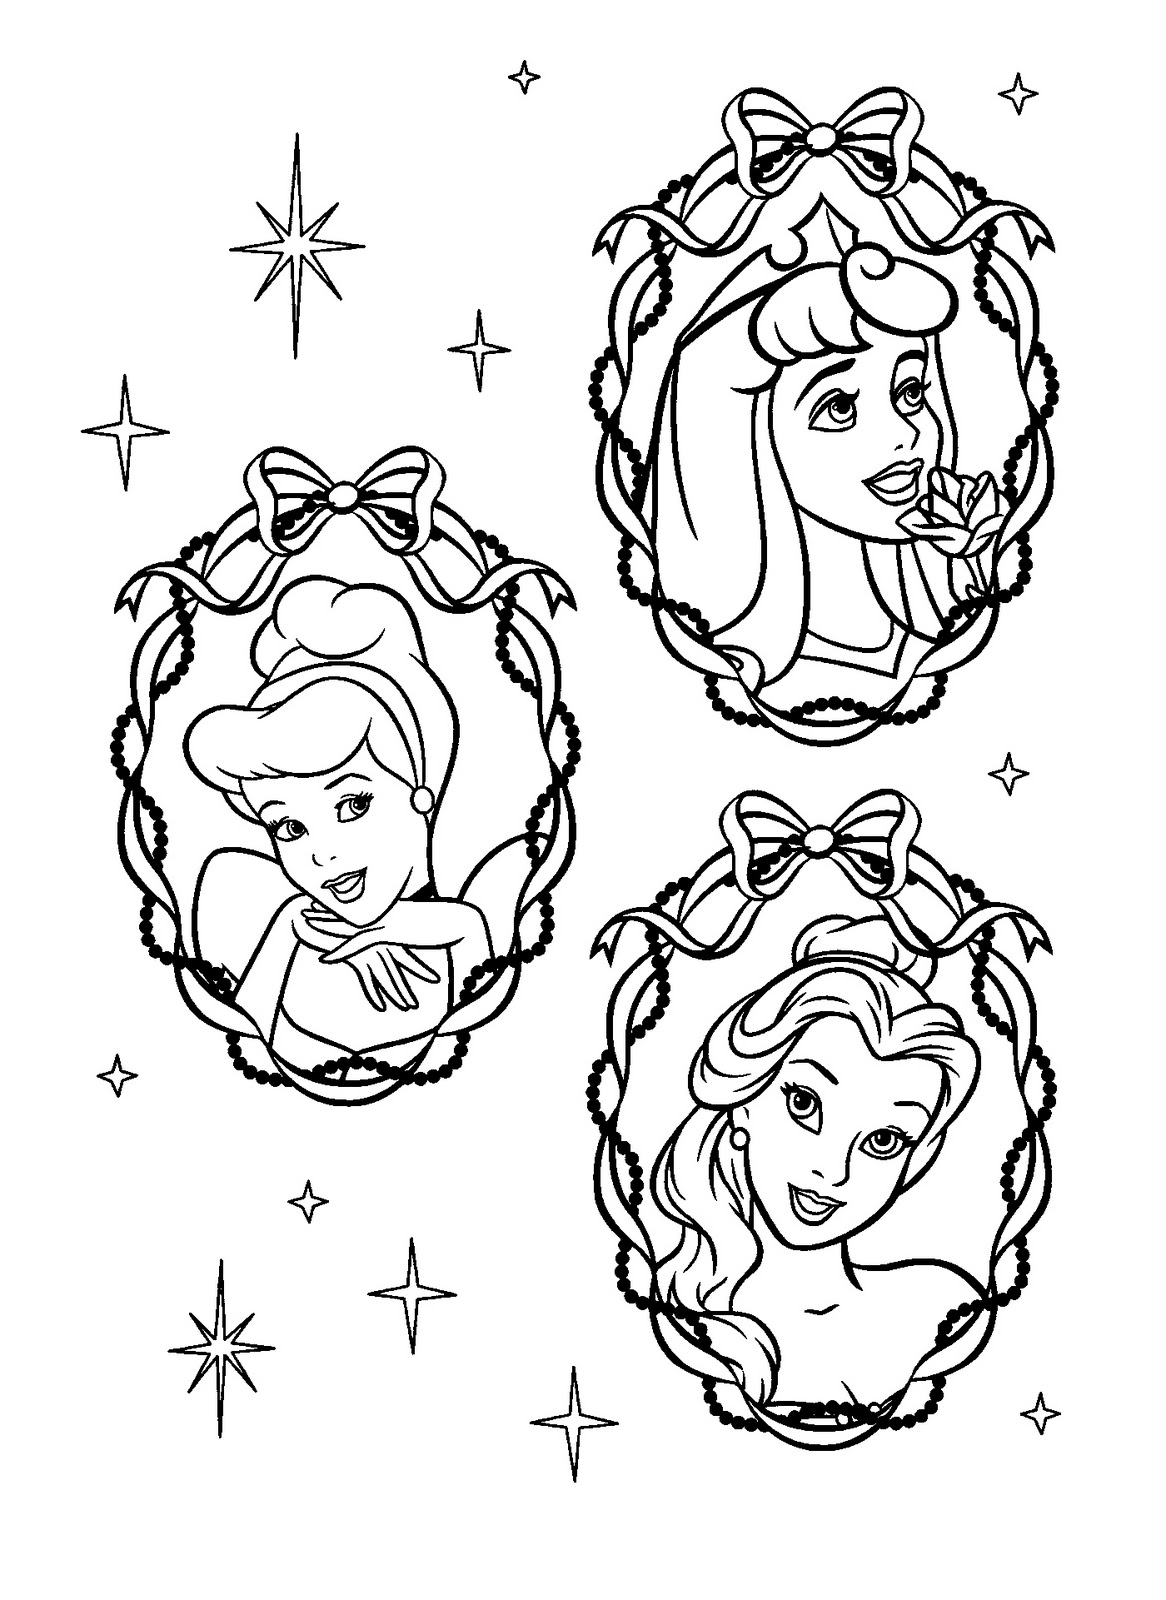 3 Disney Princess Coloring Pages To Print Free - VoteForVerde.com